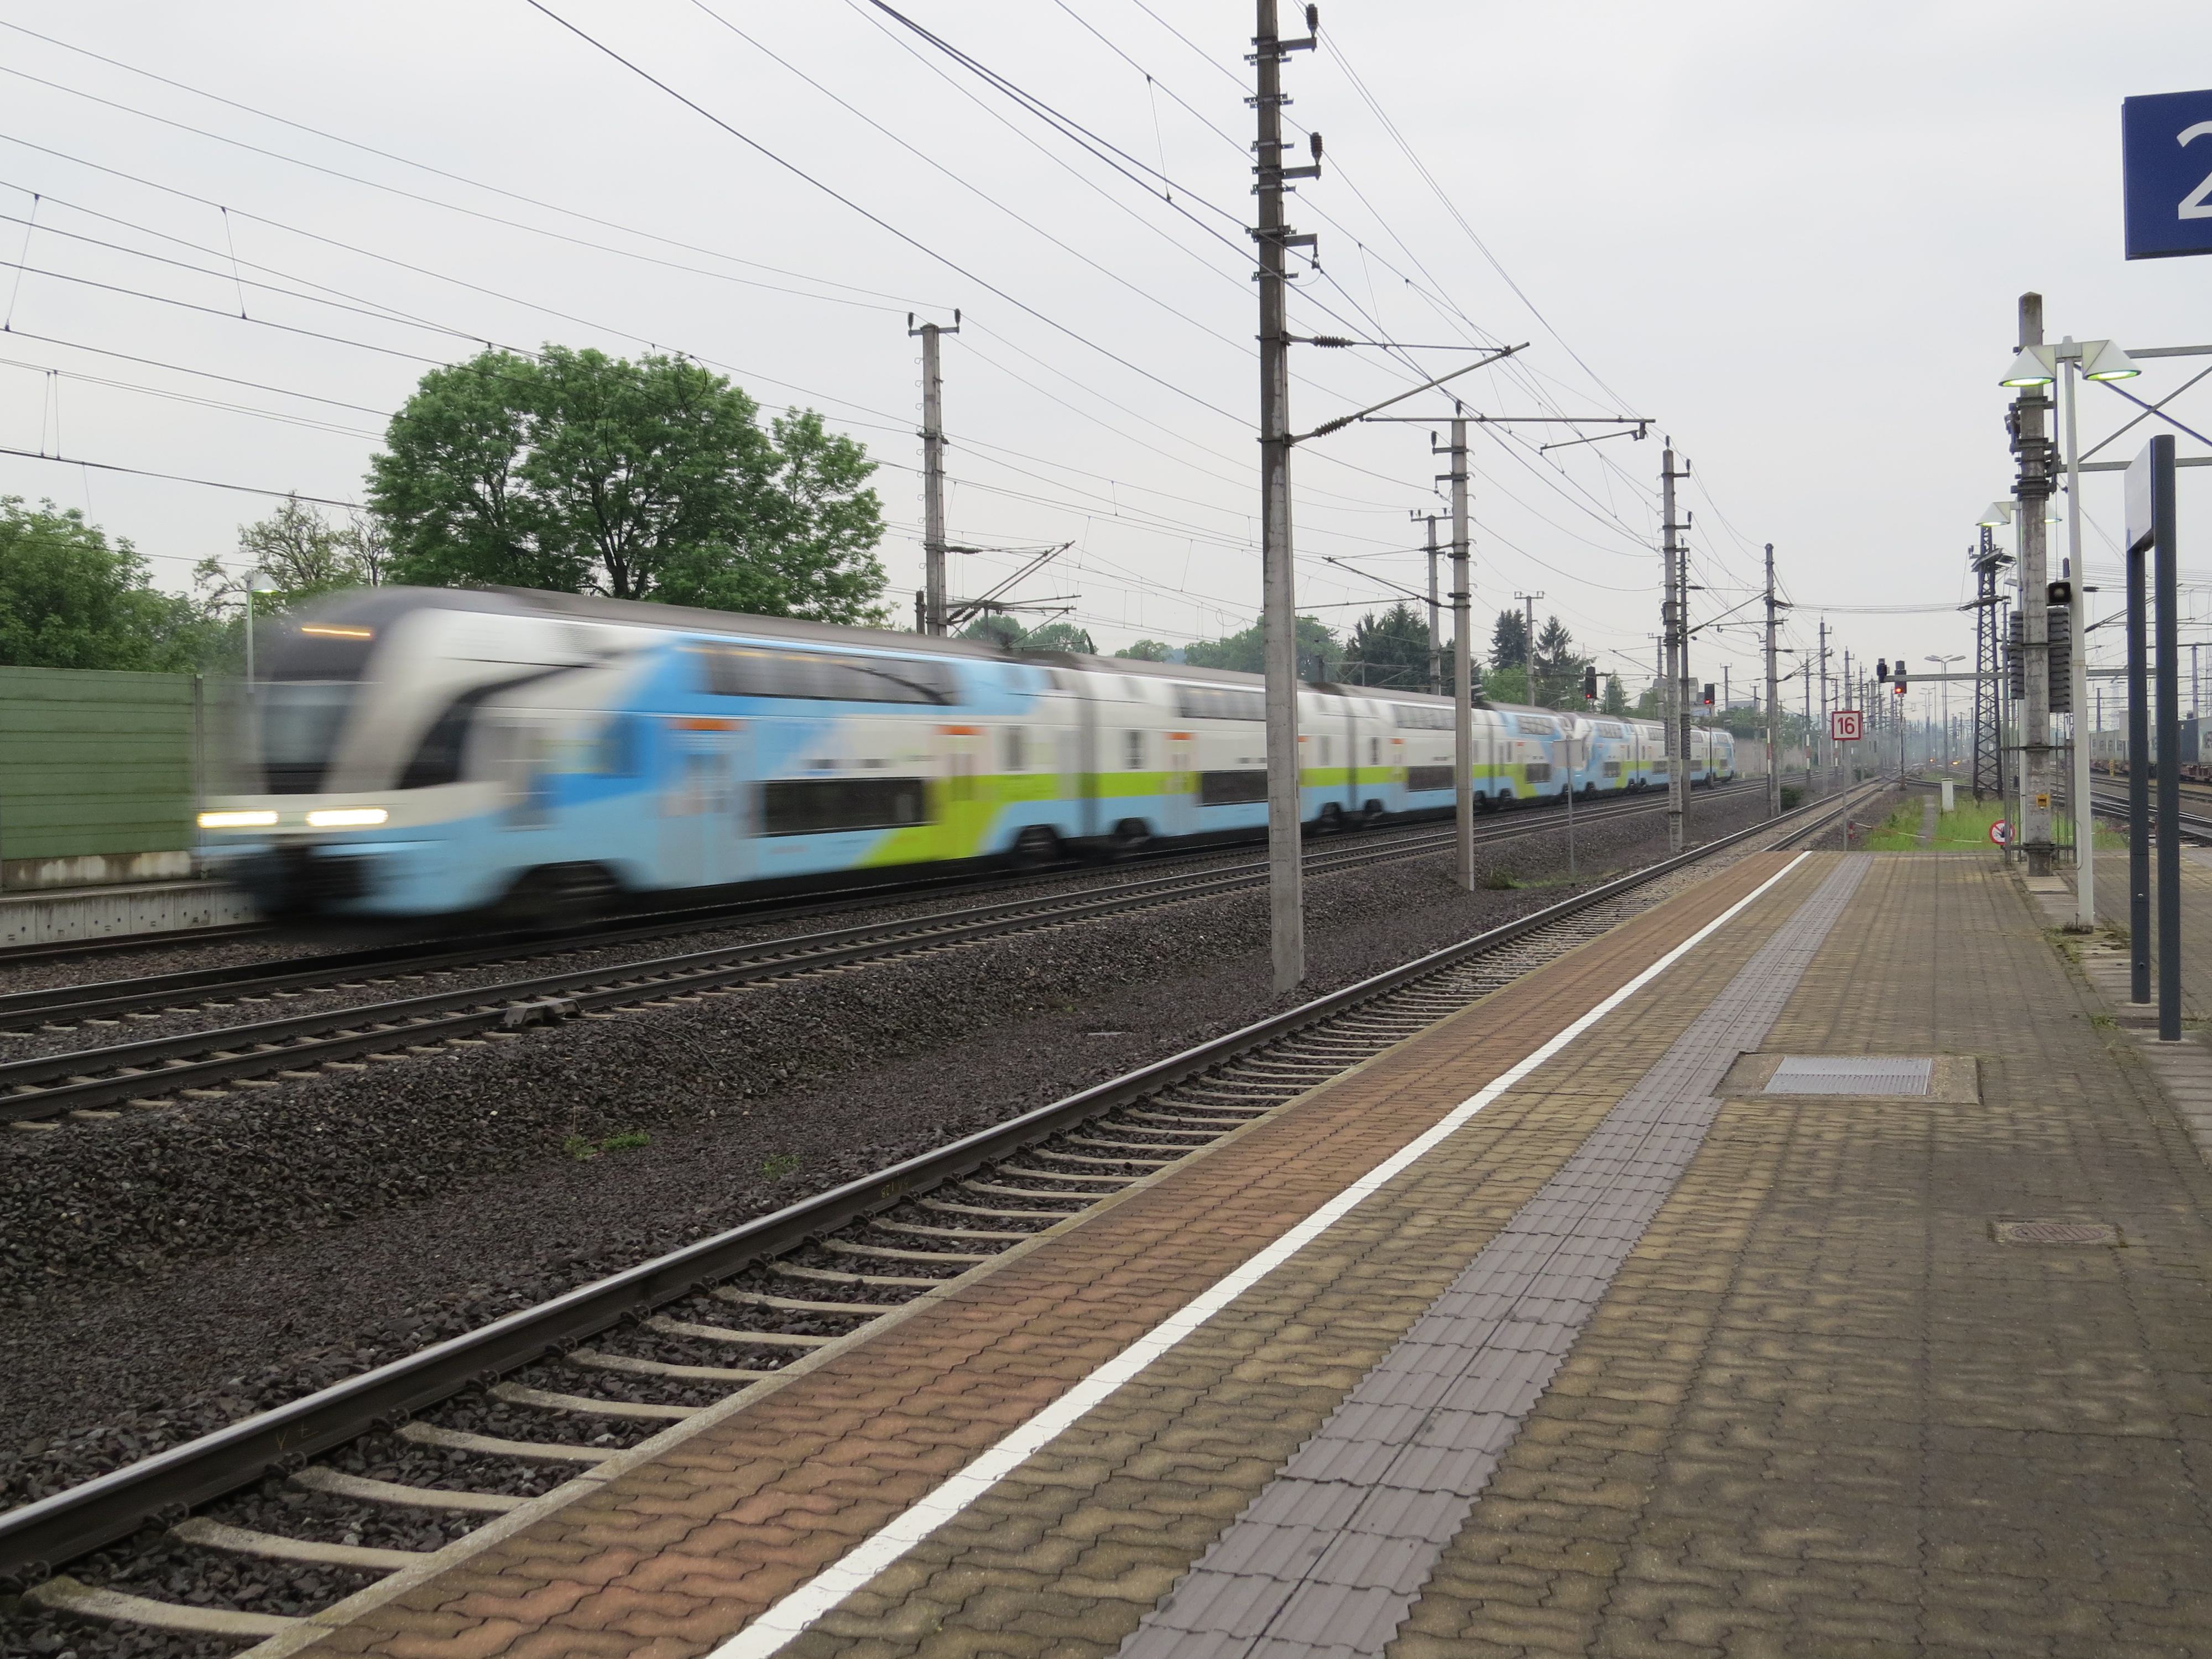 2018-05-04 (114) WESTbahn 4110 with motion blur at Bahnhof Ybbs an der Donau